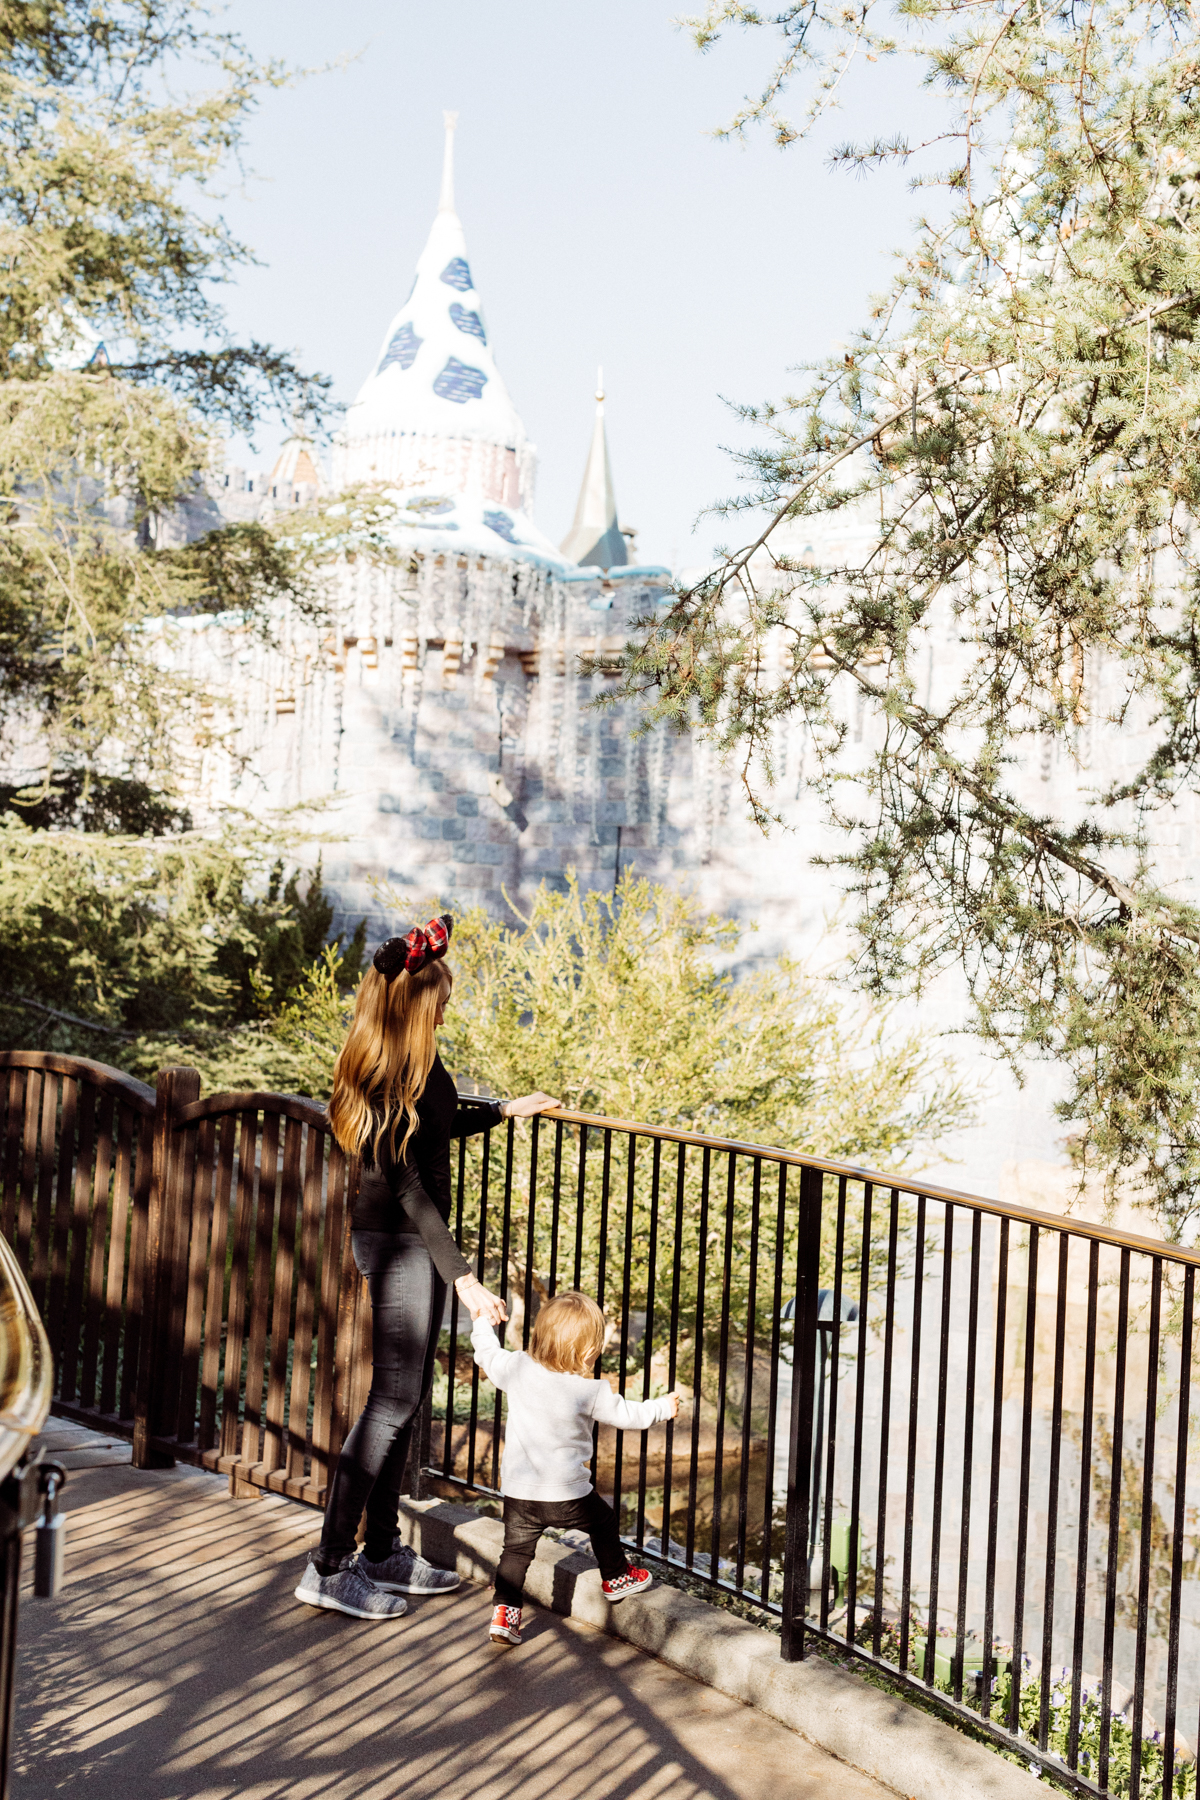 eatsleepwear kimberly lapides The holidays at Disneyland Resort at sleeping beauty's castle